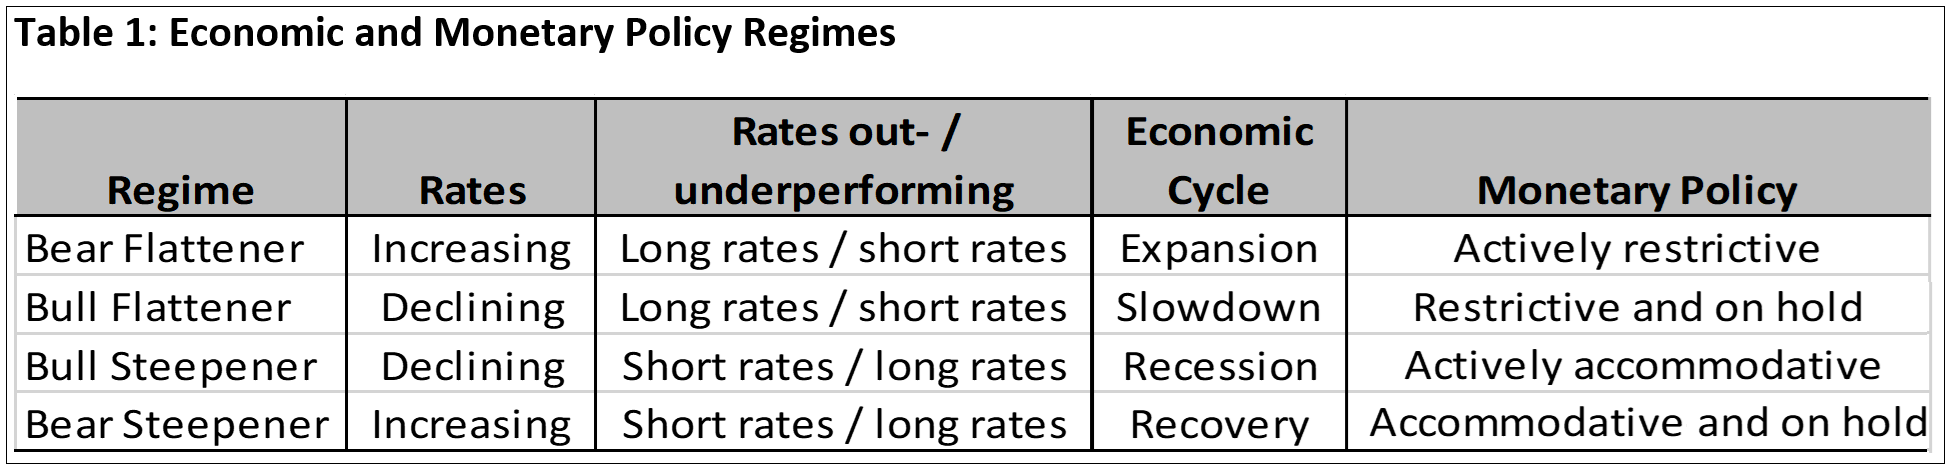 economic-and-monetary-policy-regimes